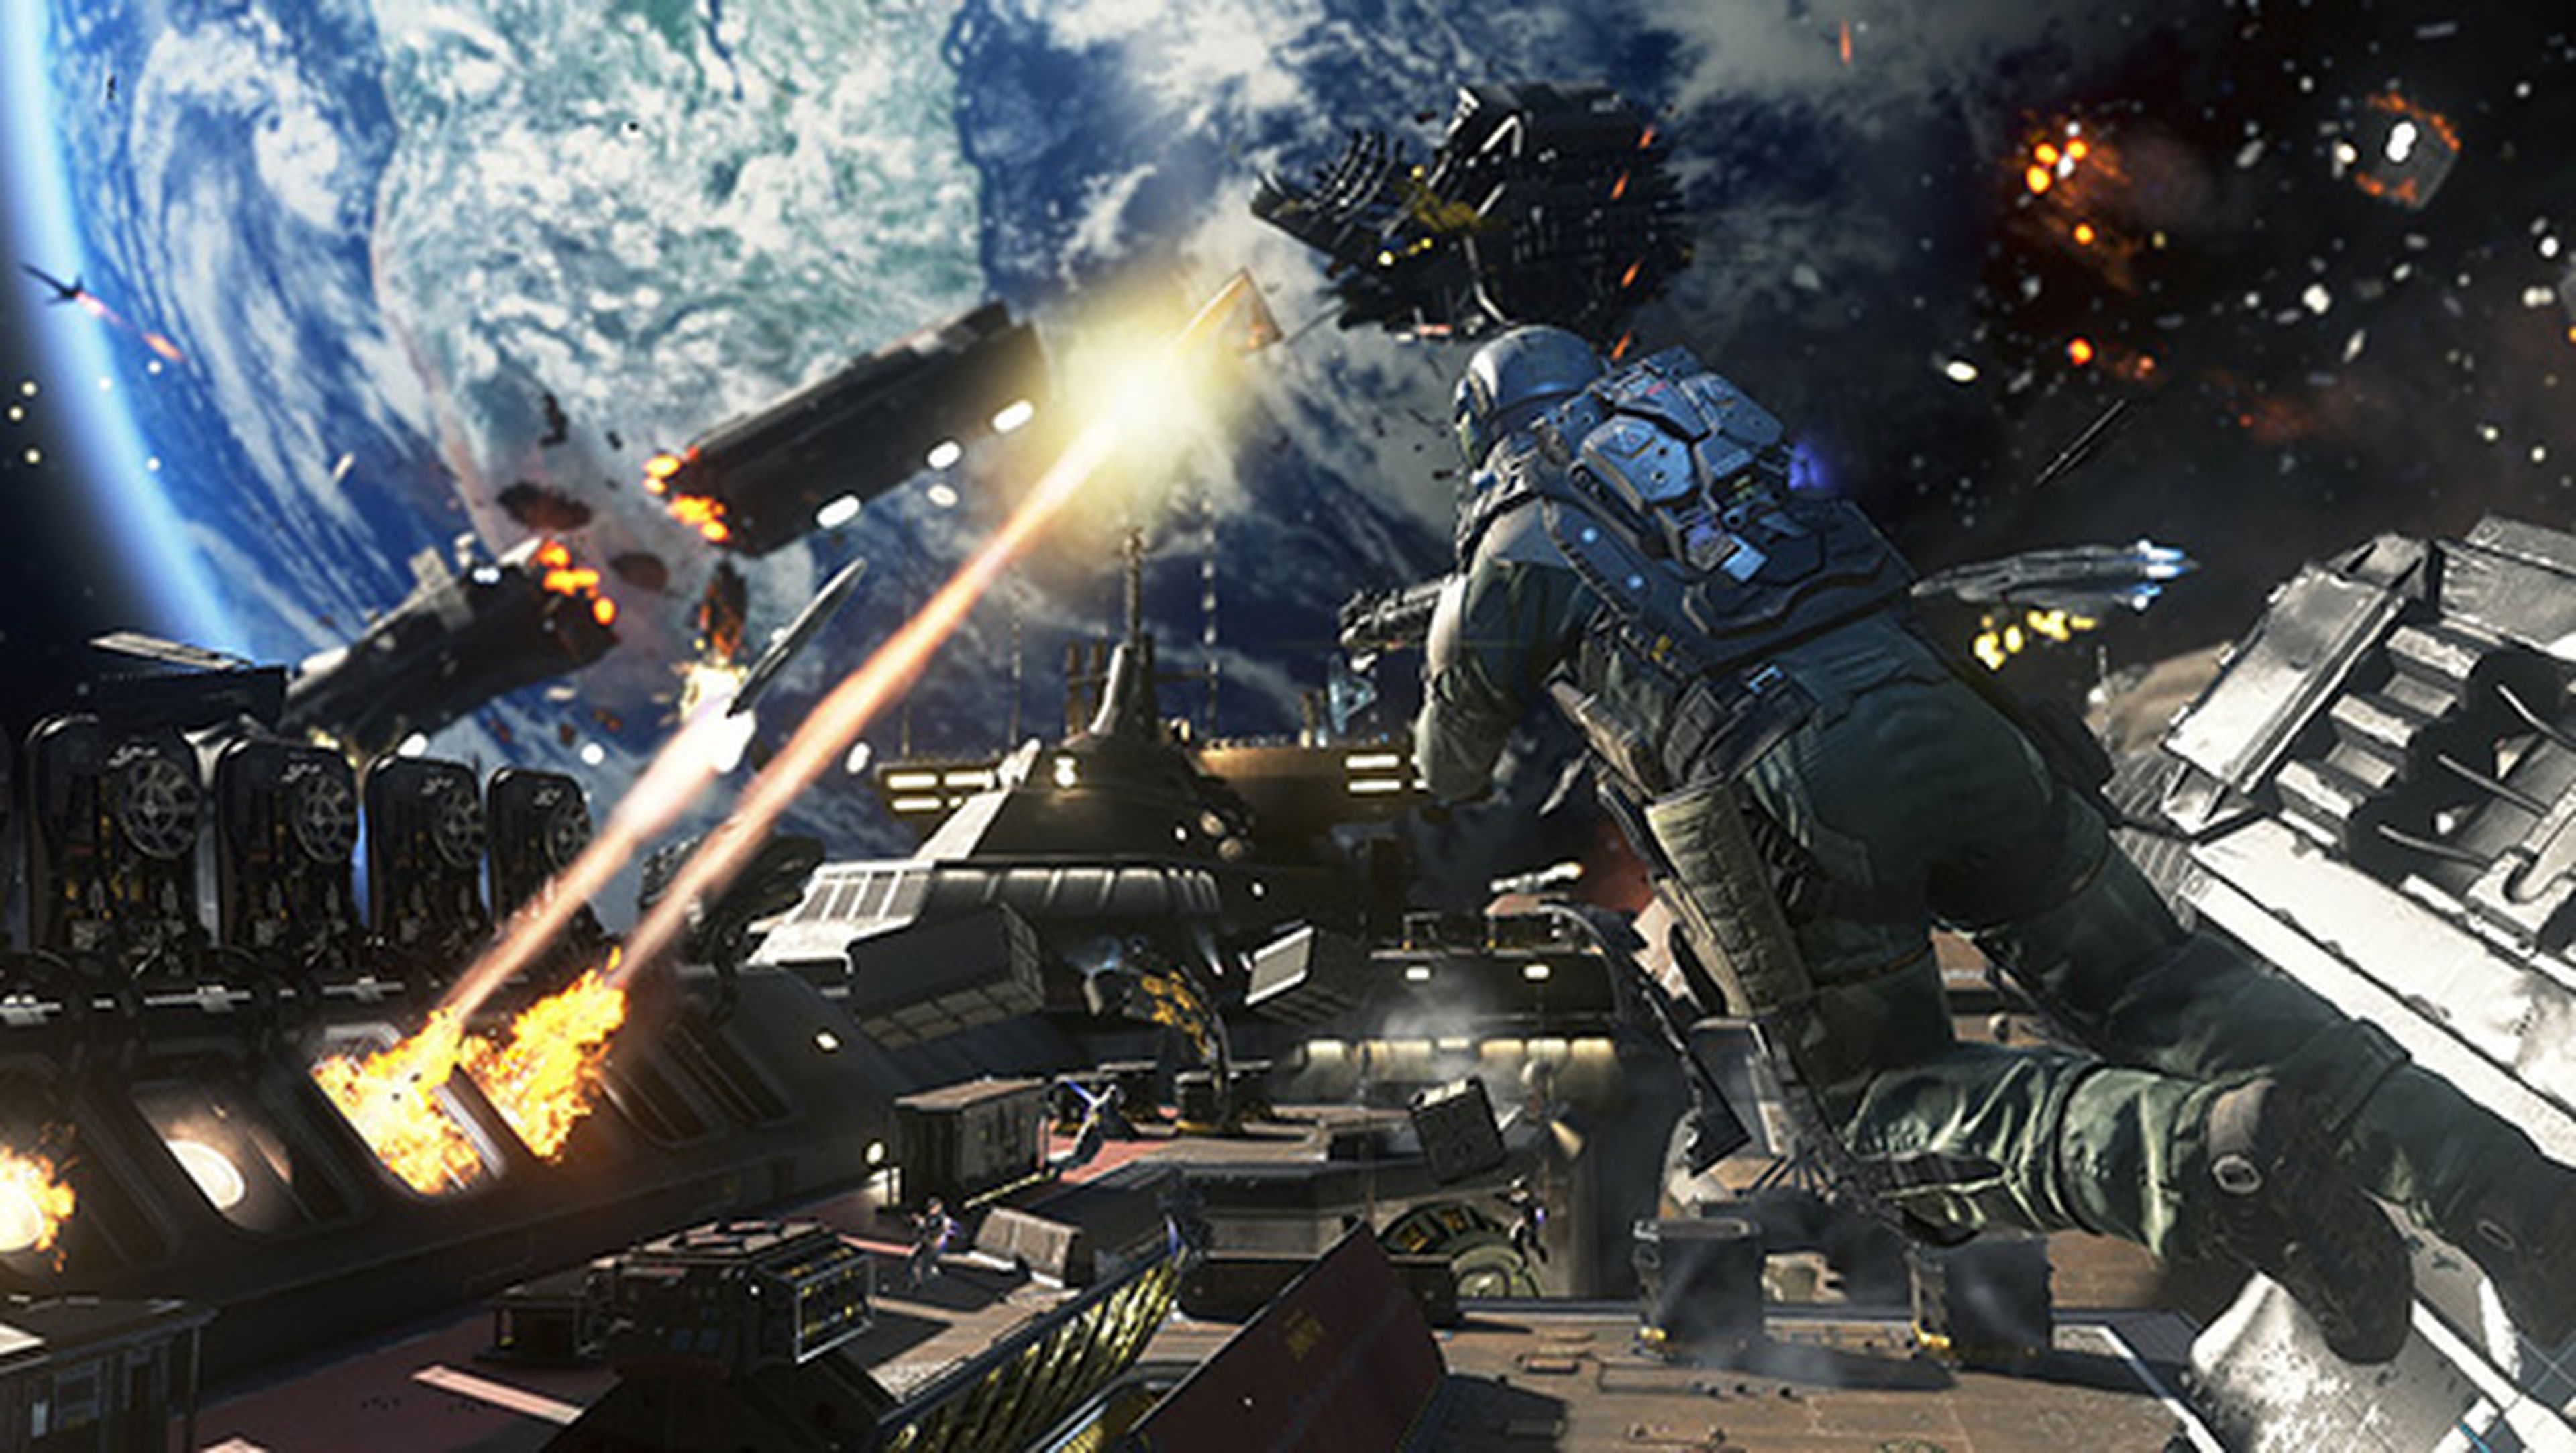 Juega gratis a Call of Duty: Infinite Warfare este fin de semana